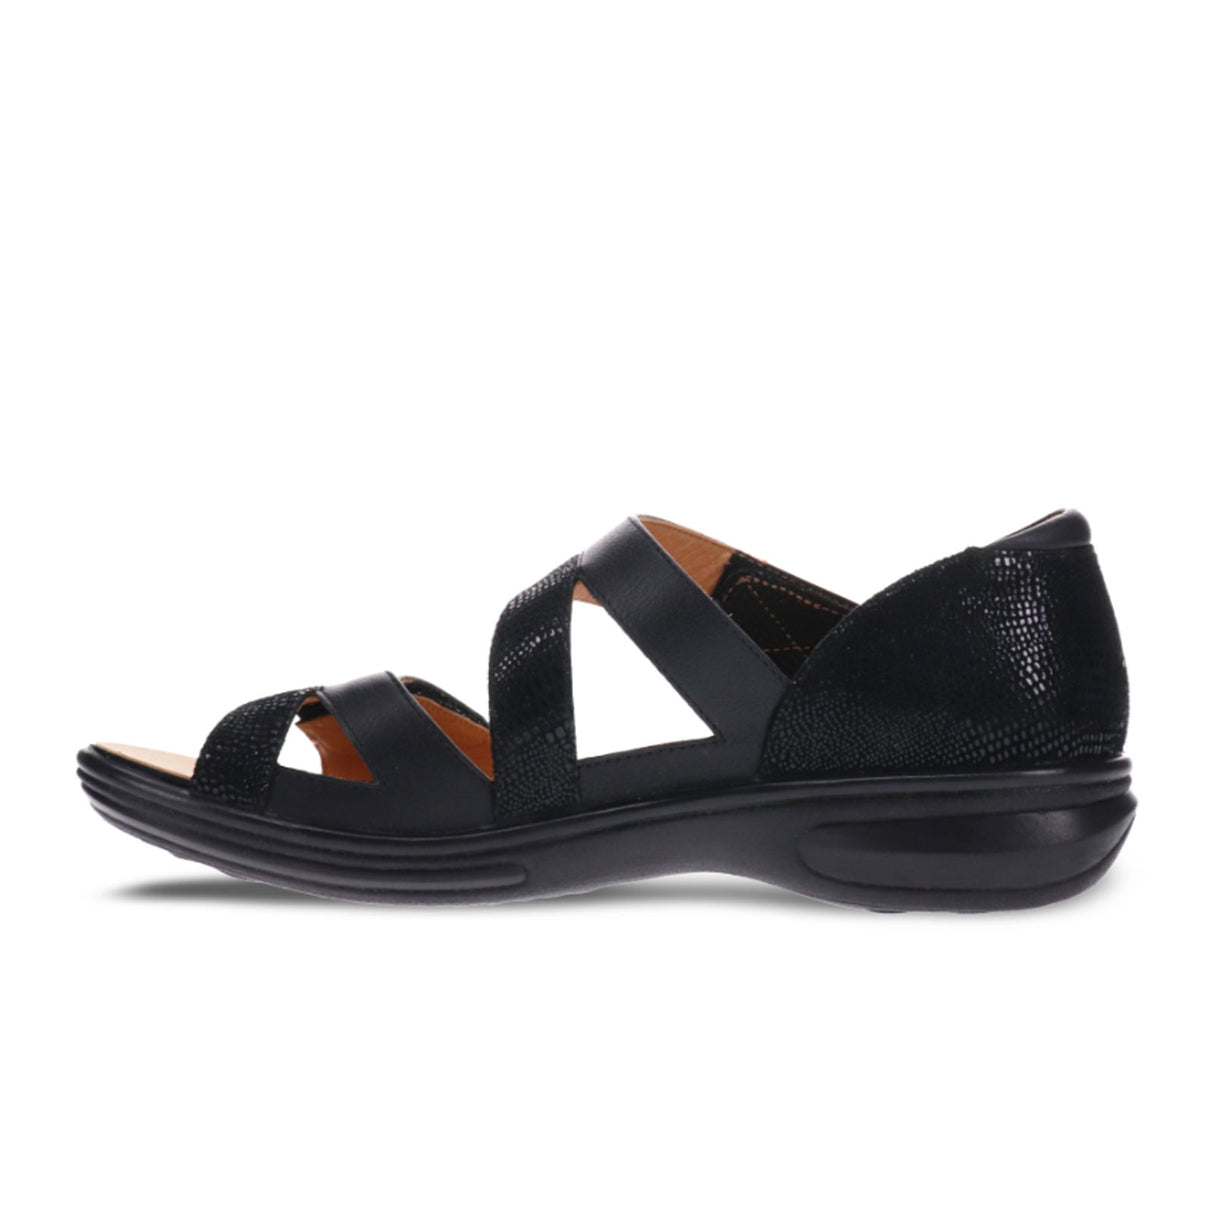 Revere Mauritius Backstrap Sandal (Women) - Black Lizard Sandals - Backstrap - The Heel Shoe Fitters